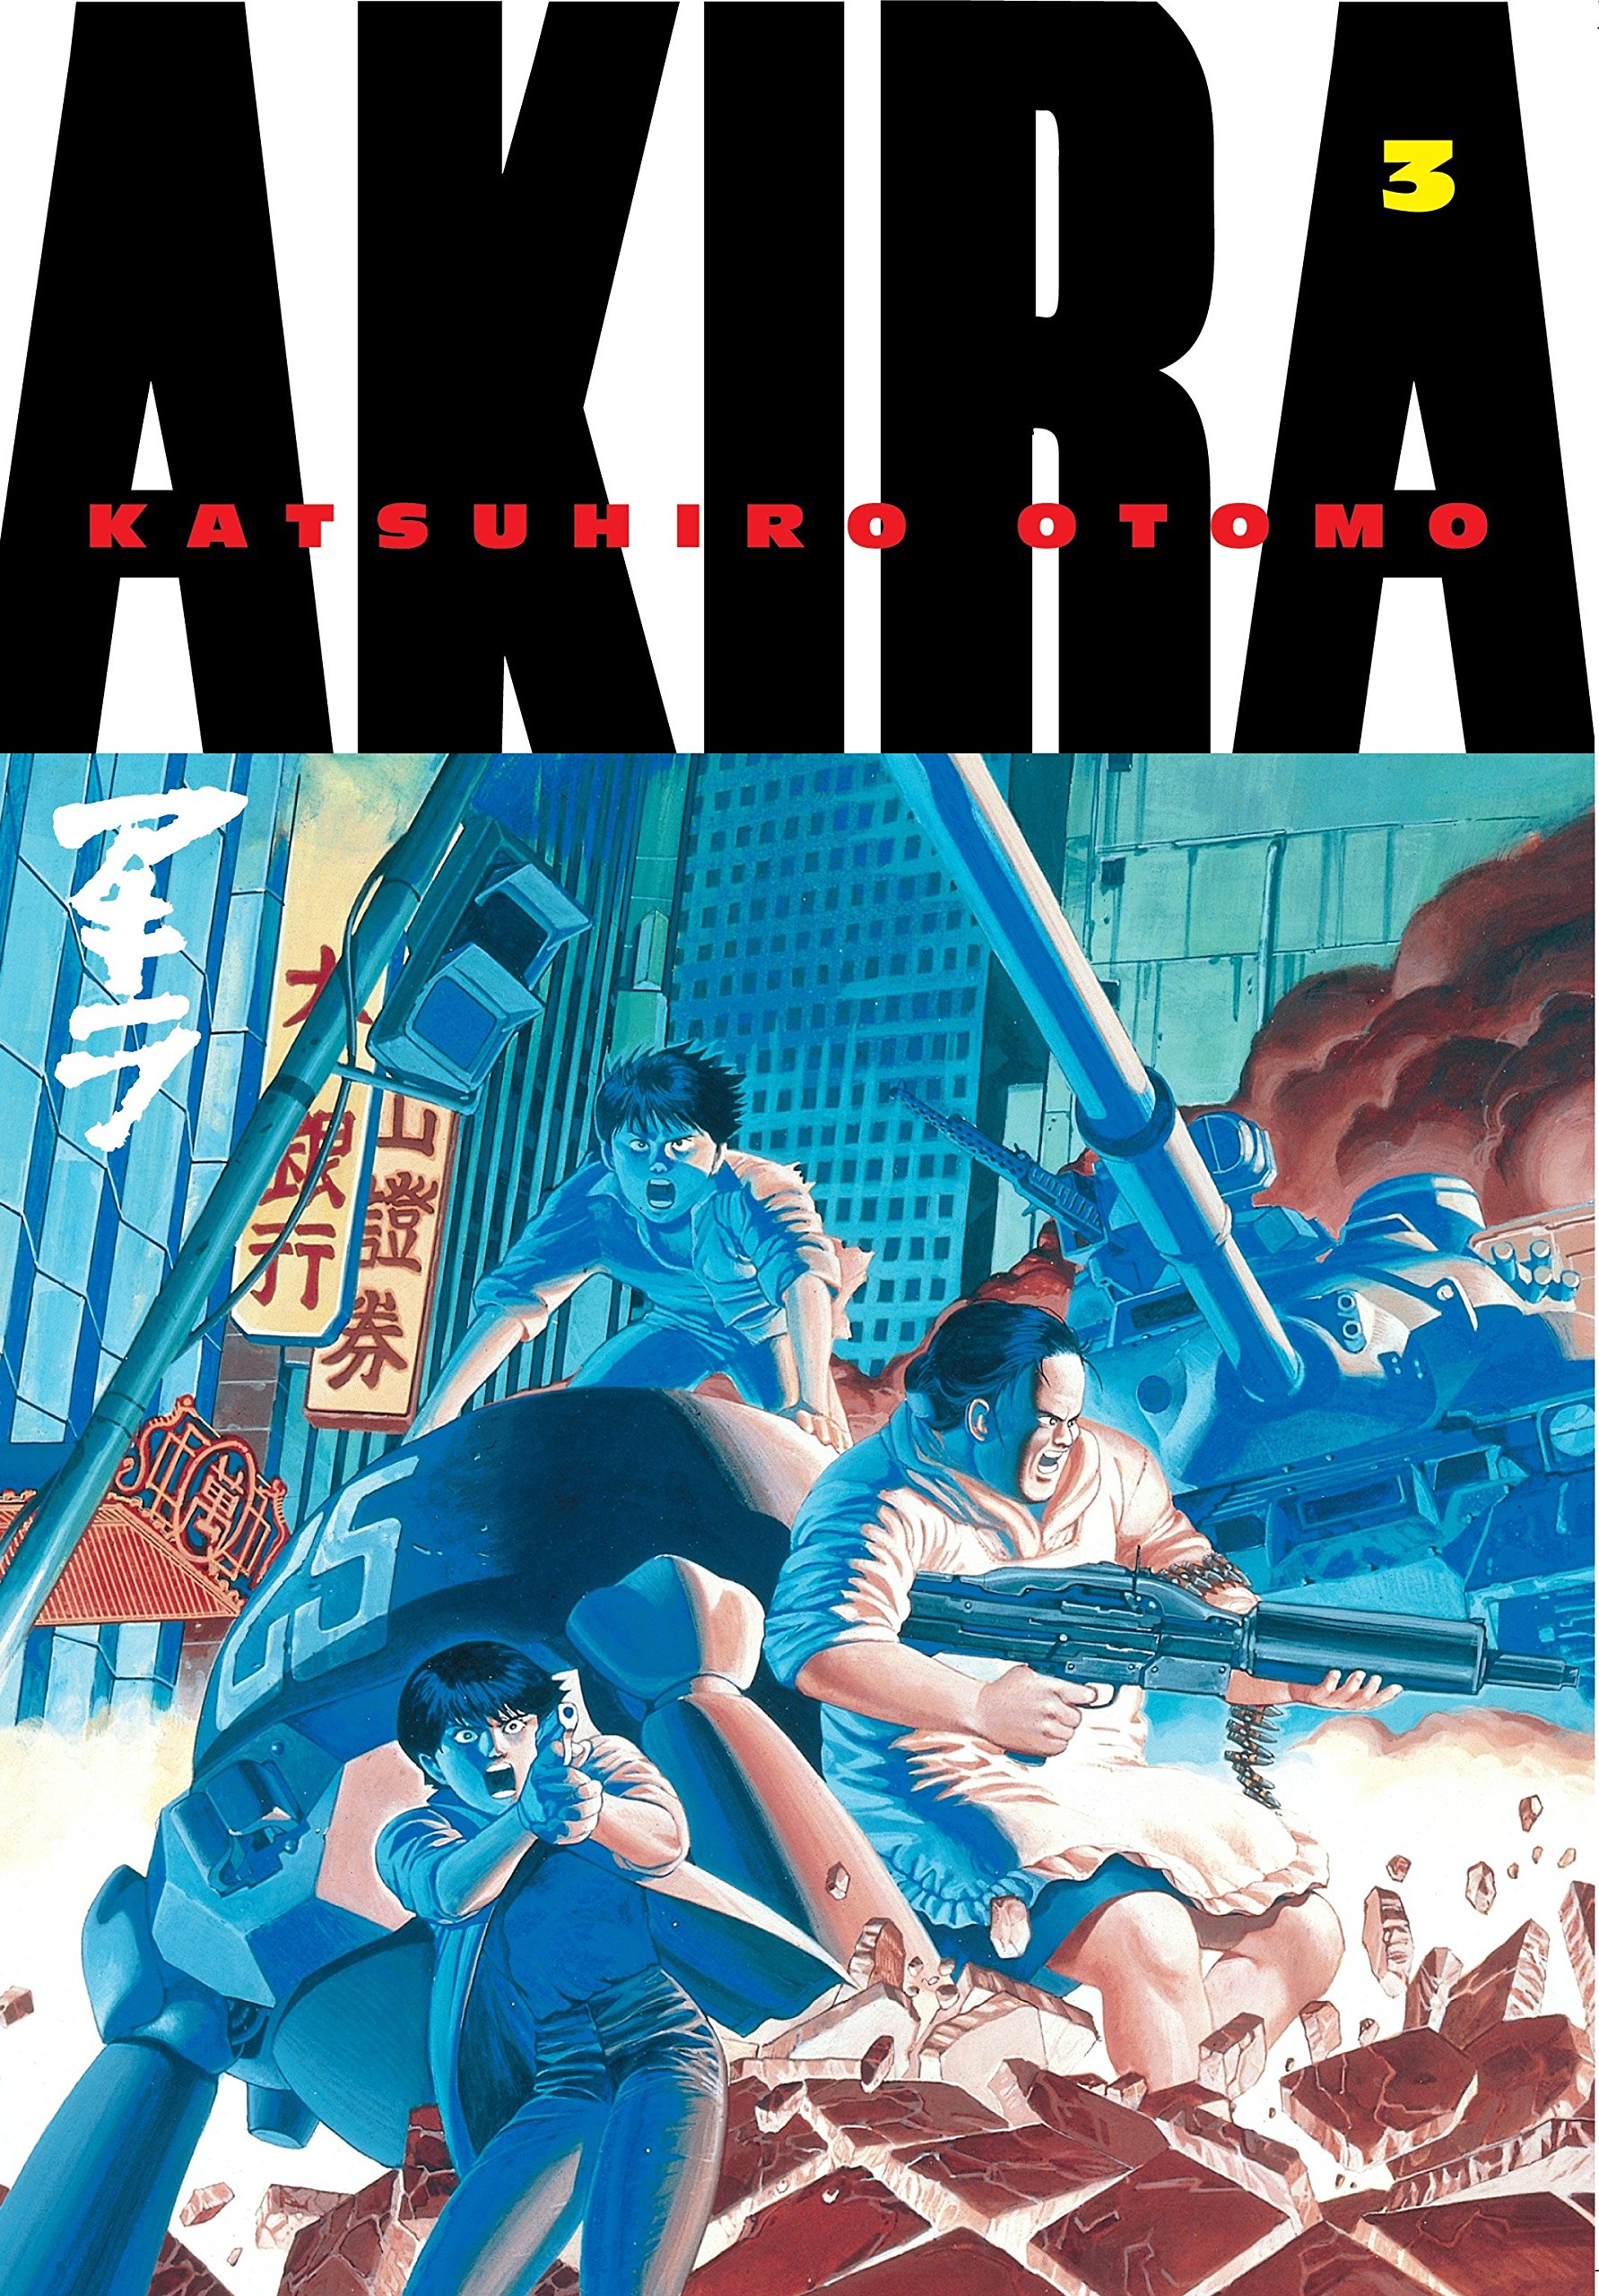 AKIRA by Katsuhiro Otomo on Mangasplaining